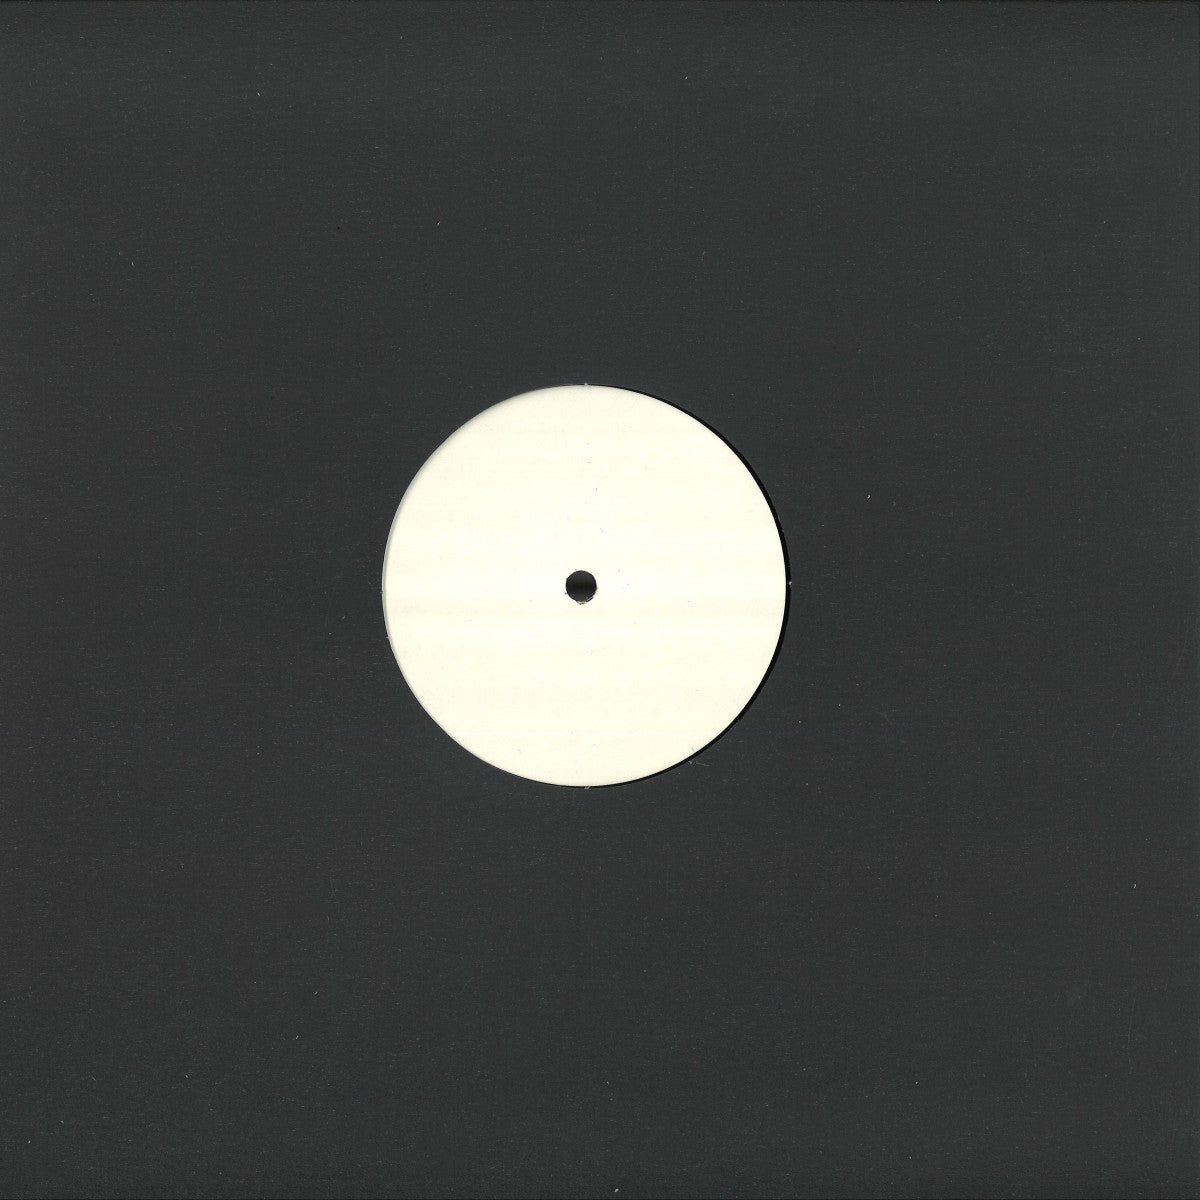 Nick Beringer - ABA 011 (solo en vinyl) [Abartik]